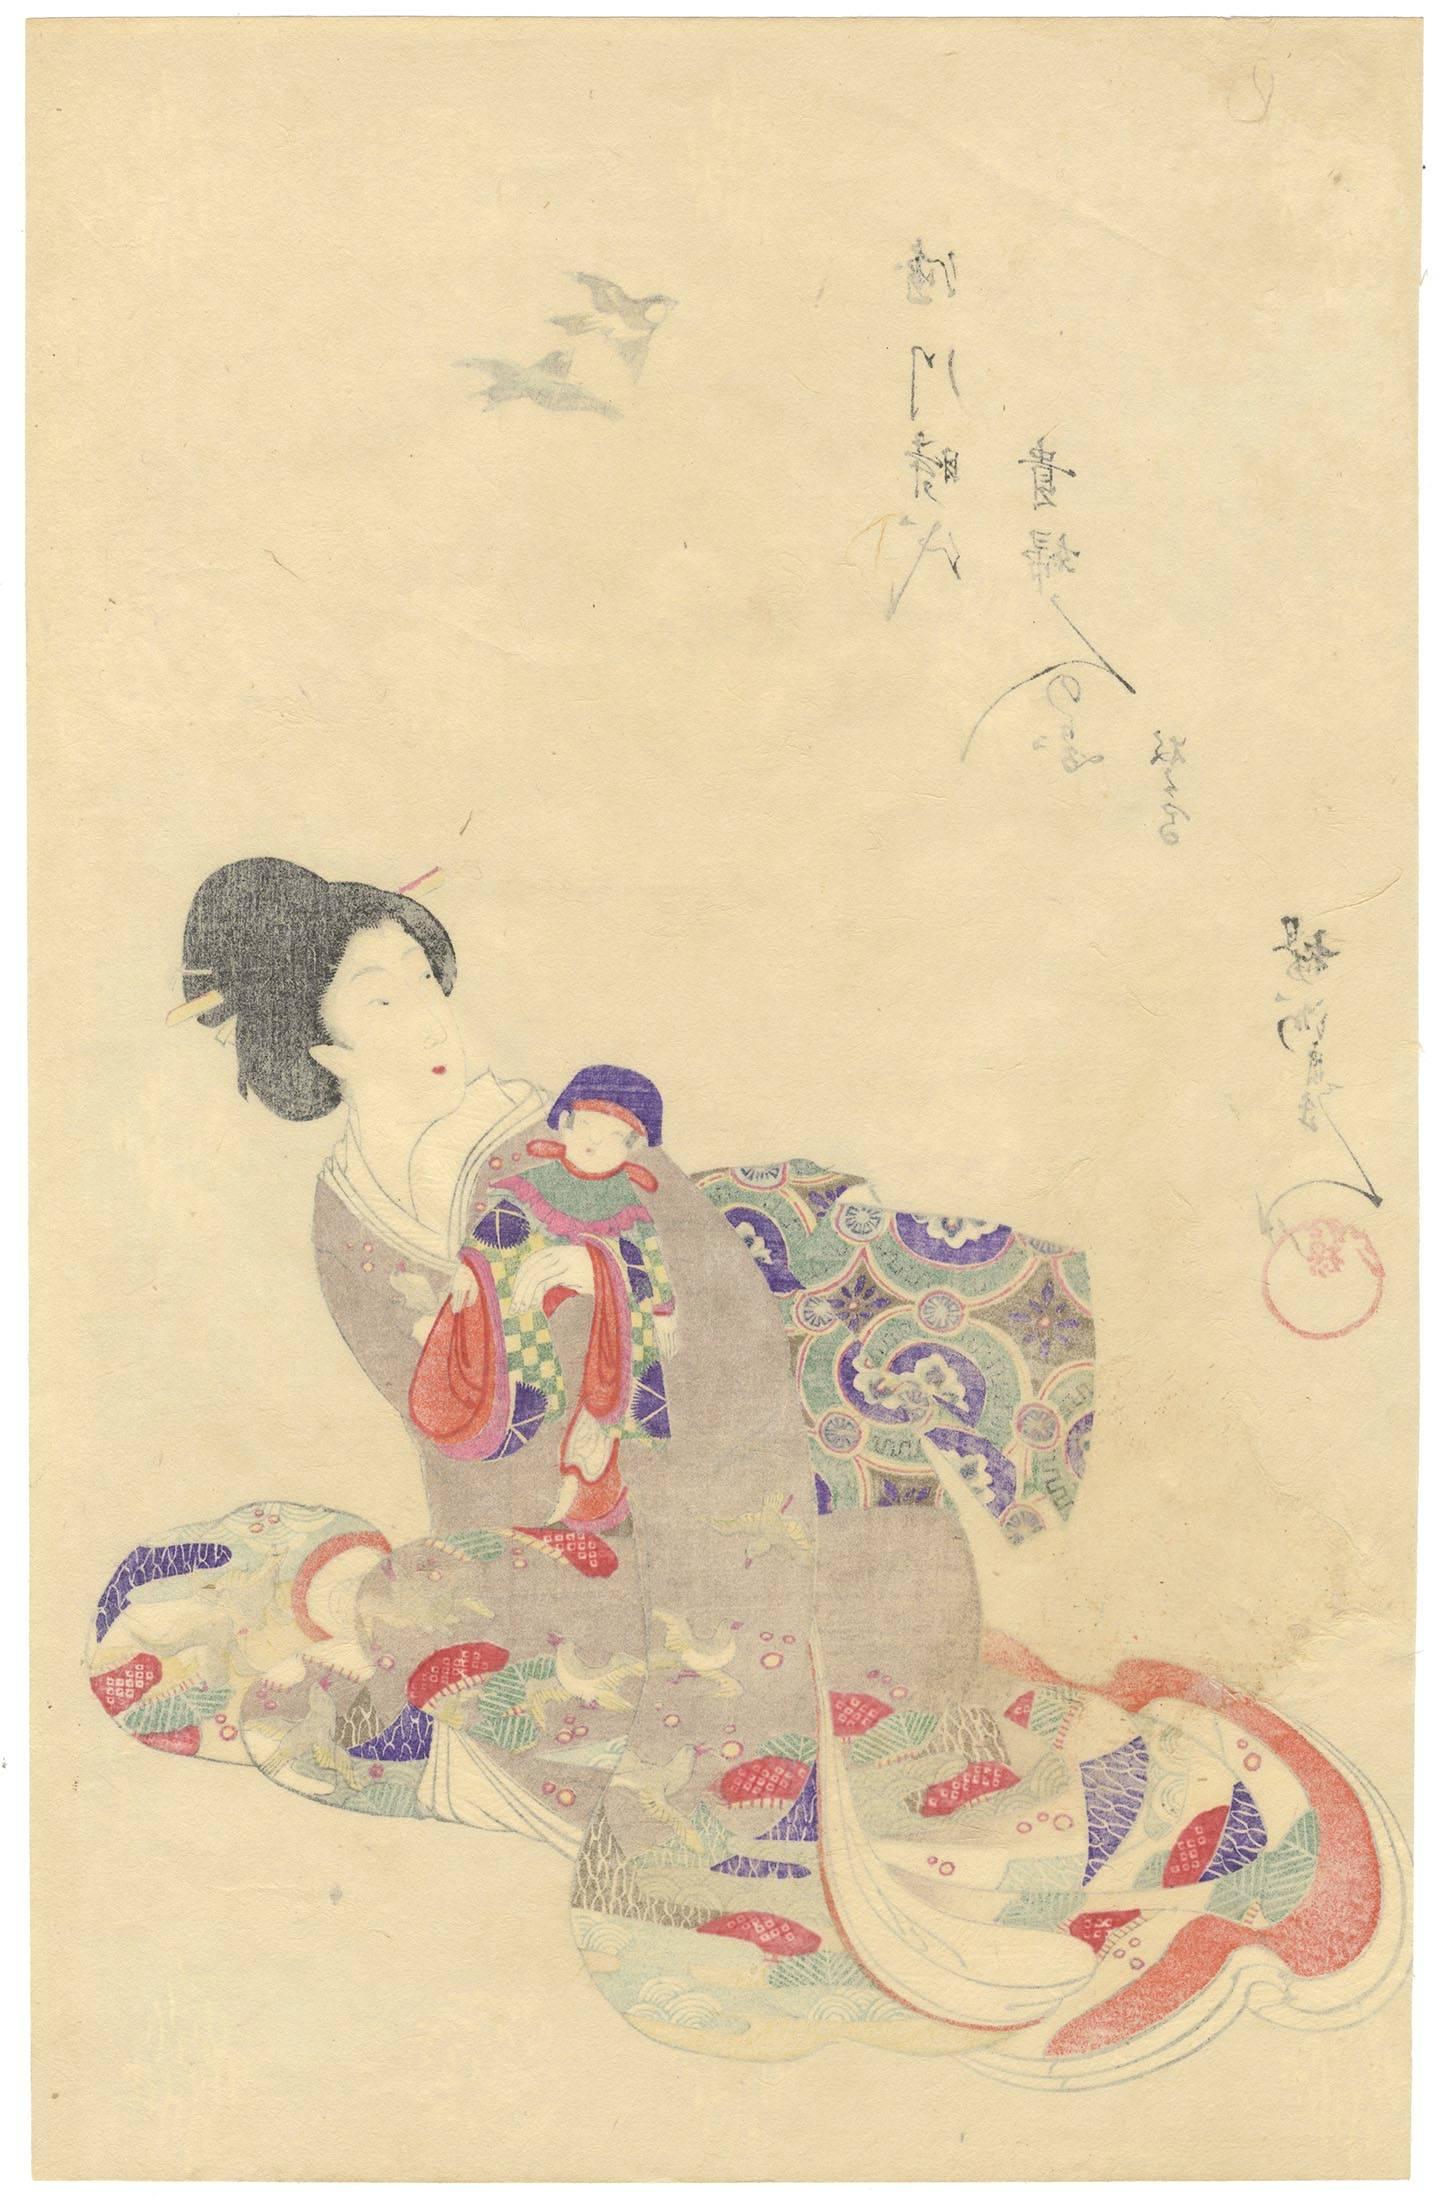 Artist: Chikanobu Yoshu (1838-1912)
Title: Girl with Toy and Flying Birds
Series Title: High-ranking Ladies of the Tokugawa Era
Publisher: Hasegawa Tsunejiro
Date: Late 19th century
Dimensions: (L) 23 x 35.7 (M) 24.8 x 35.7 (R) 24.6 x 35.8